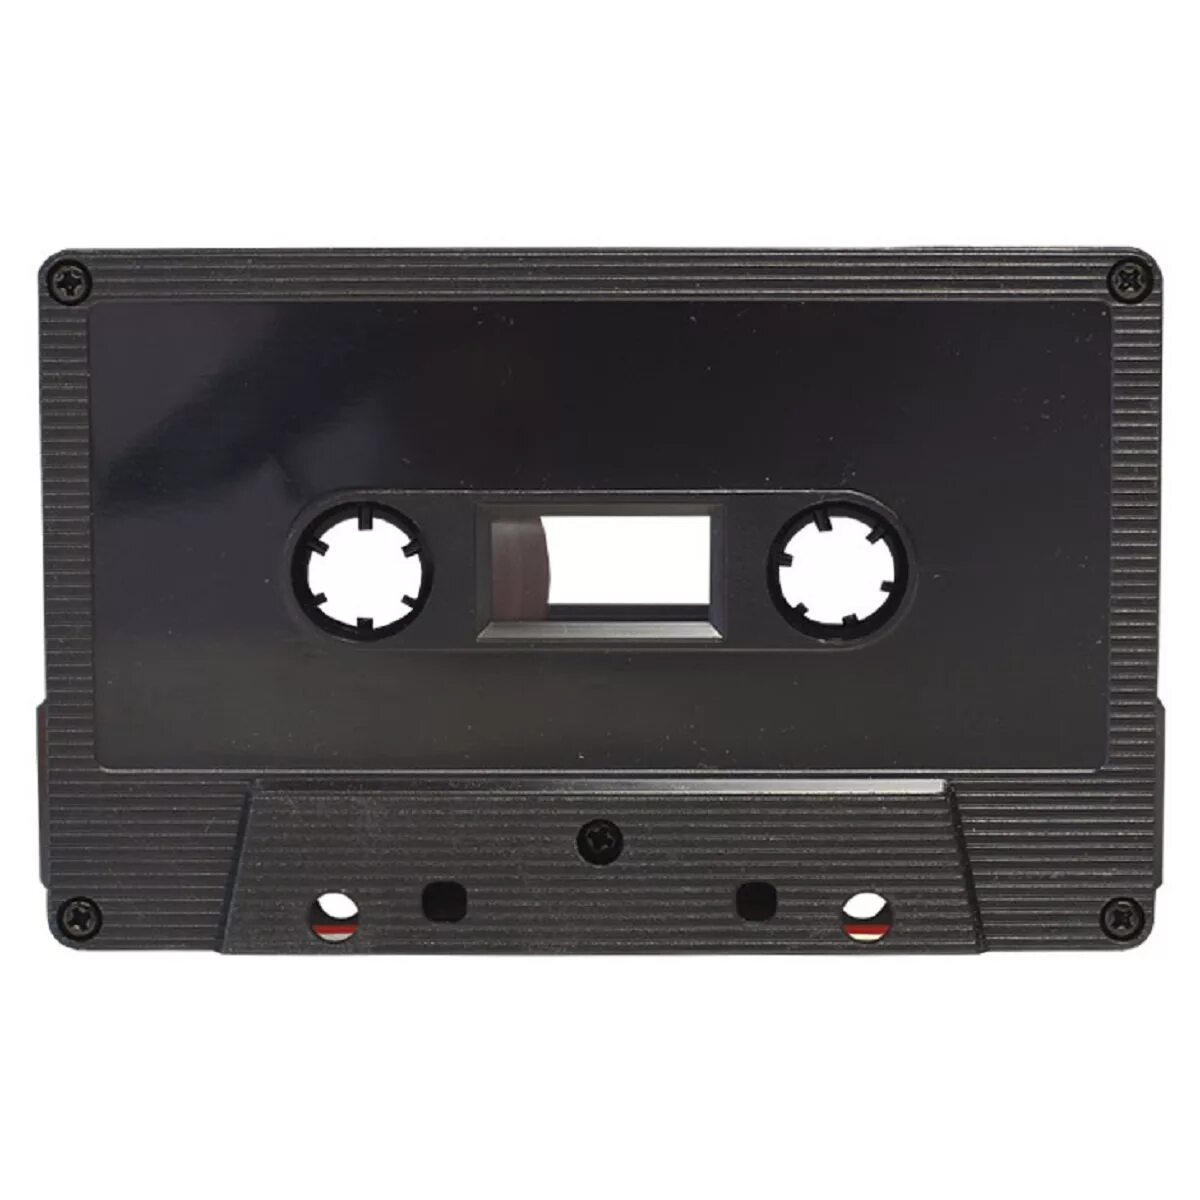 Батину кассету. Аудио кассета CVS "Cassette Color" 46. Коссета Maxweii 90. Аудио кассеты Ronees. Черная кассета.